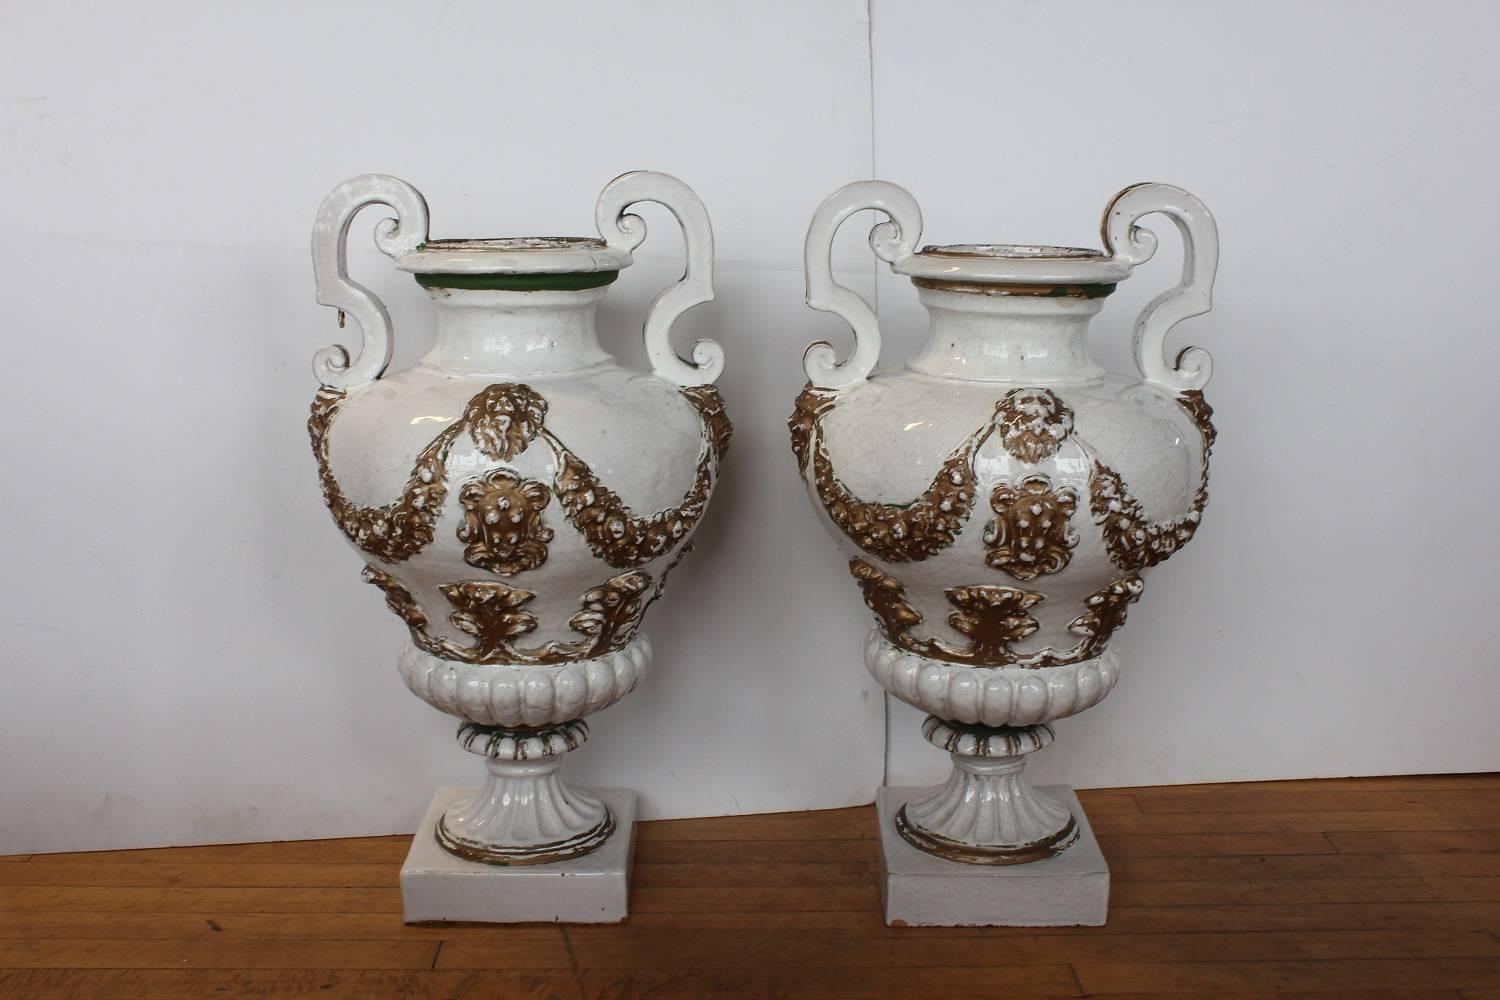 Antique Italian hand-painted glazed terracotta urns.